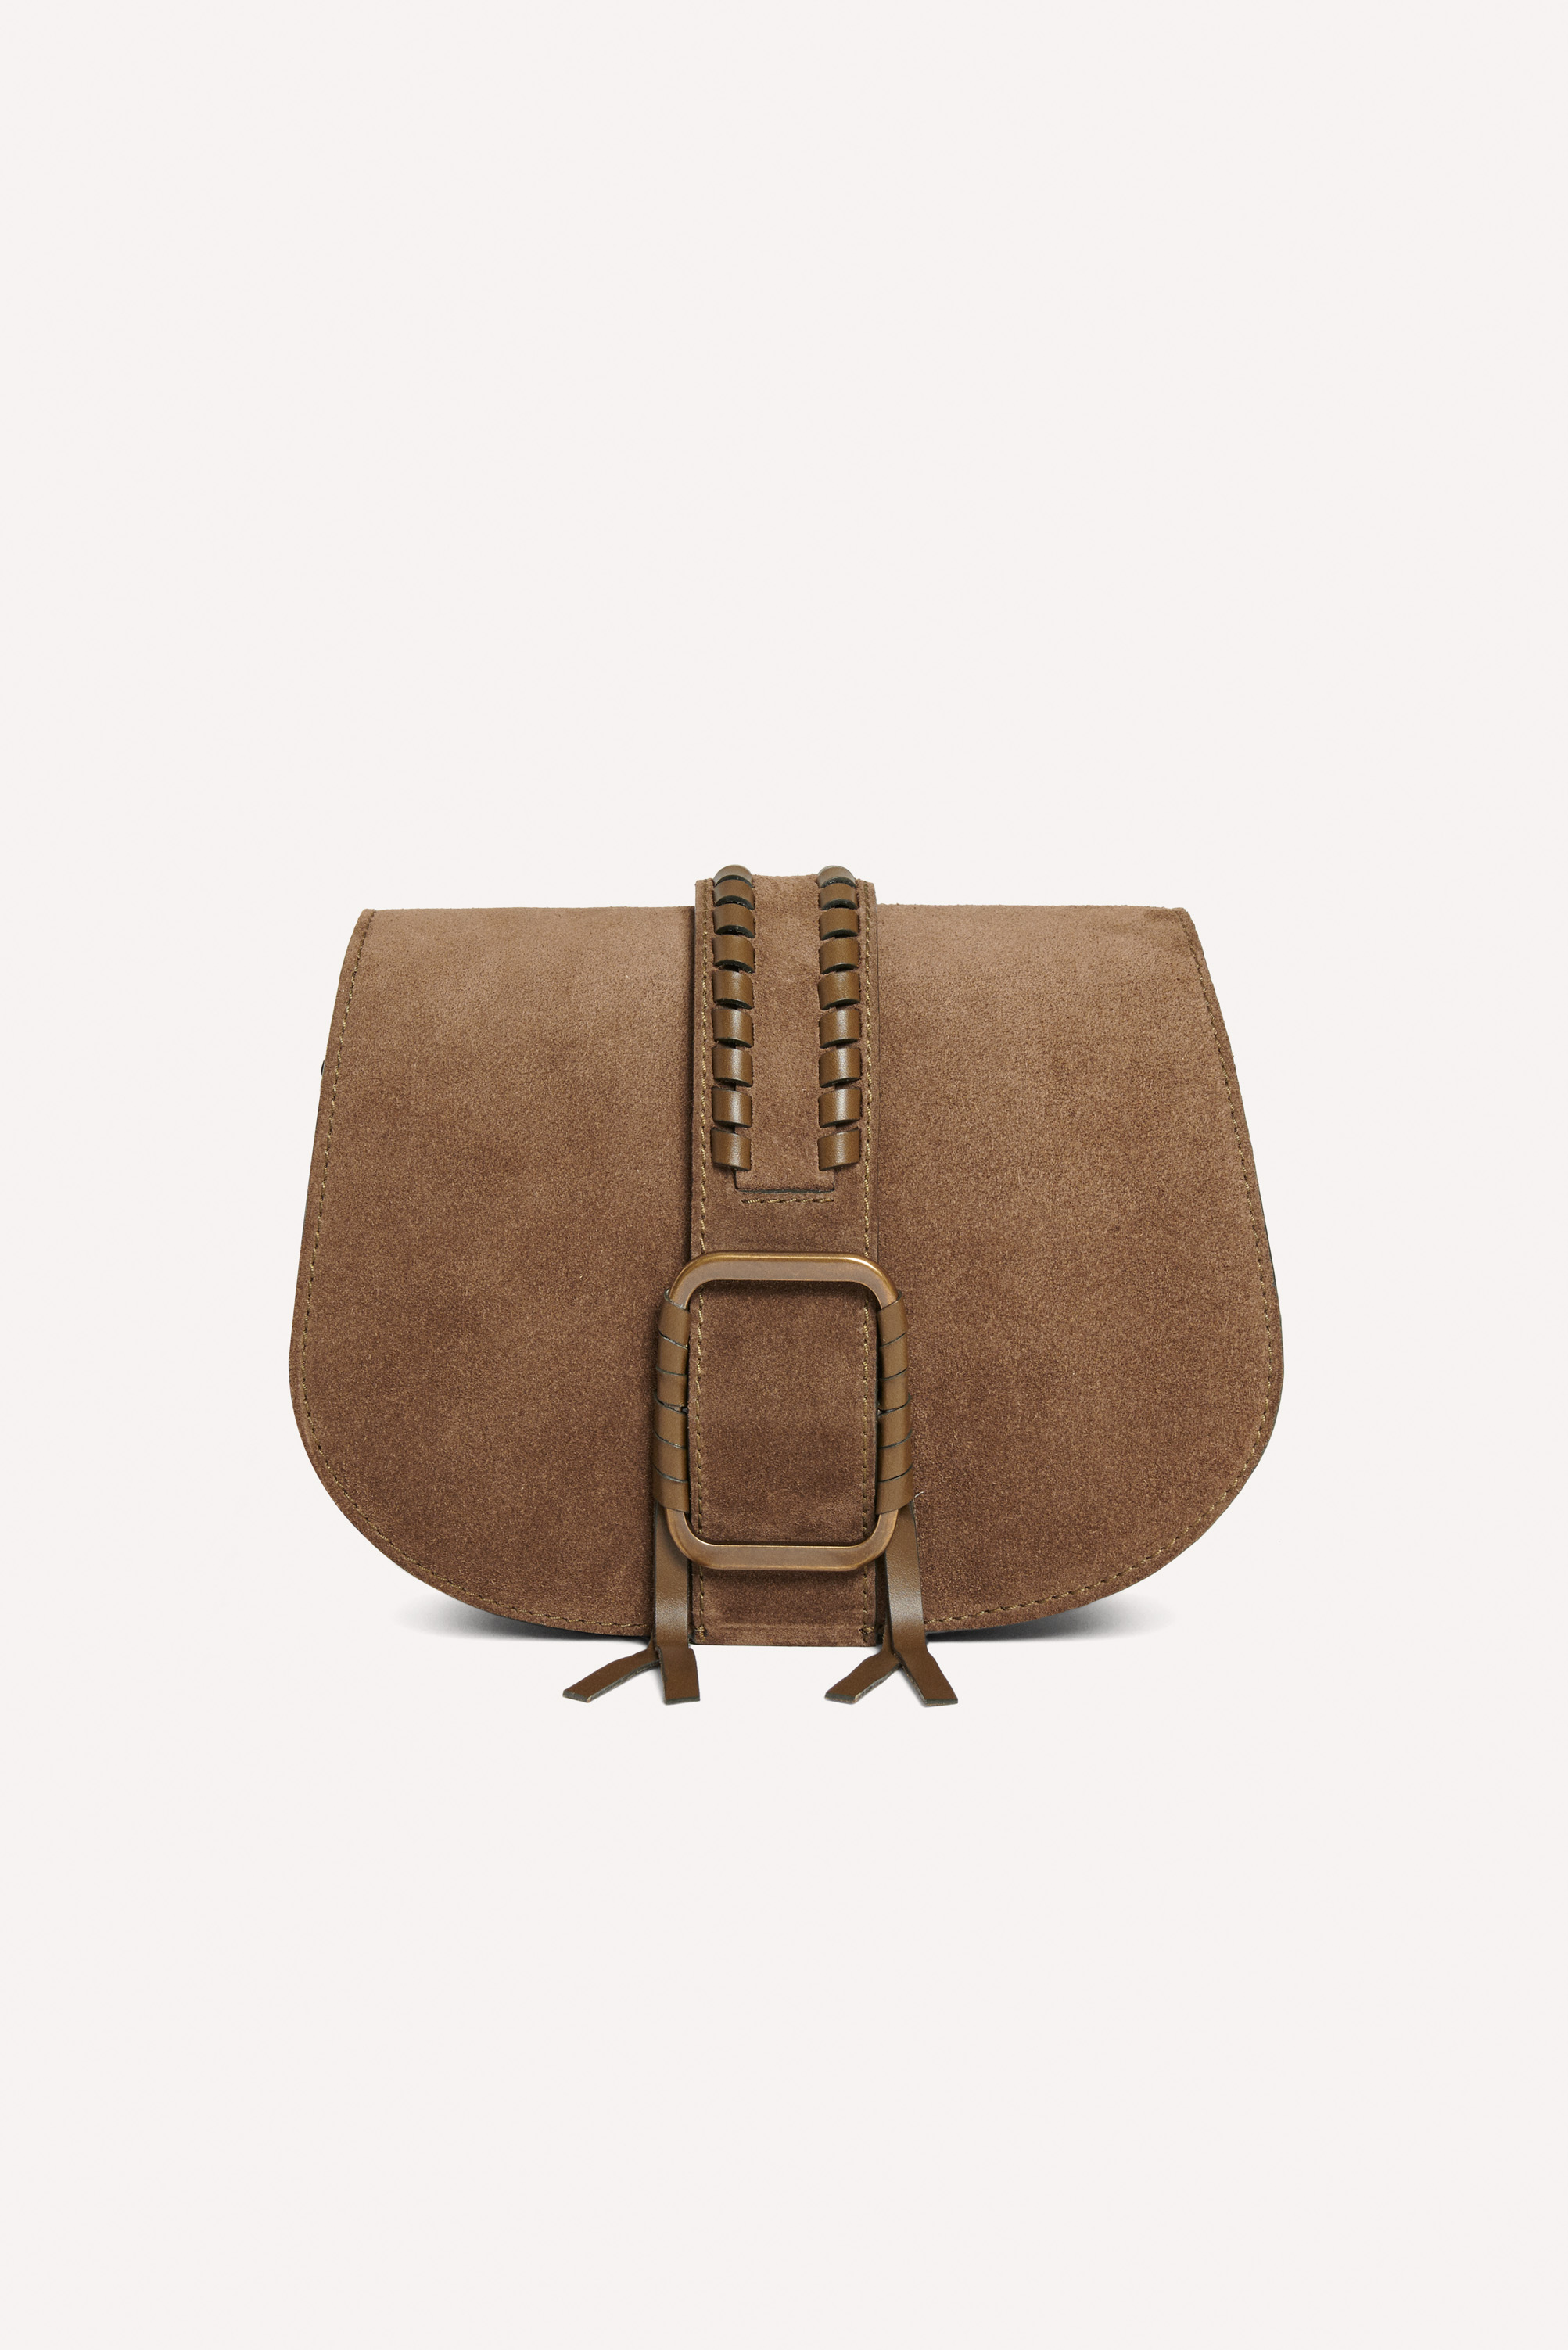 small calfskin leather shoulder bag TEDDY BLACK // ba&sh US